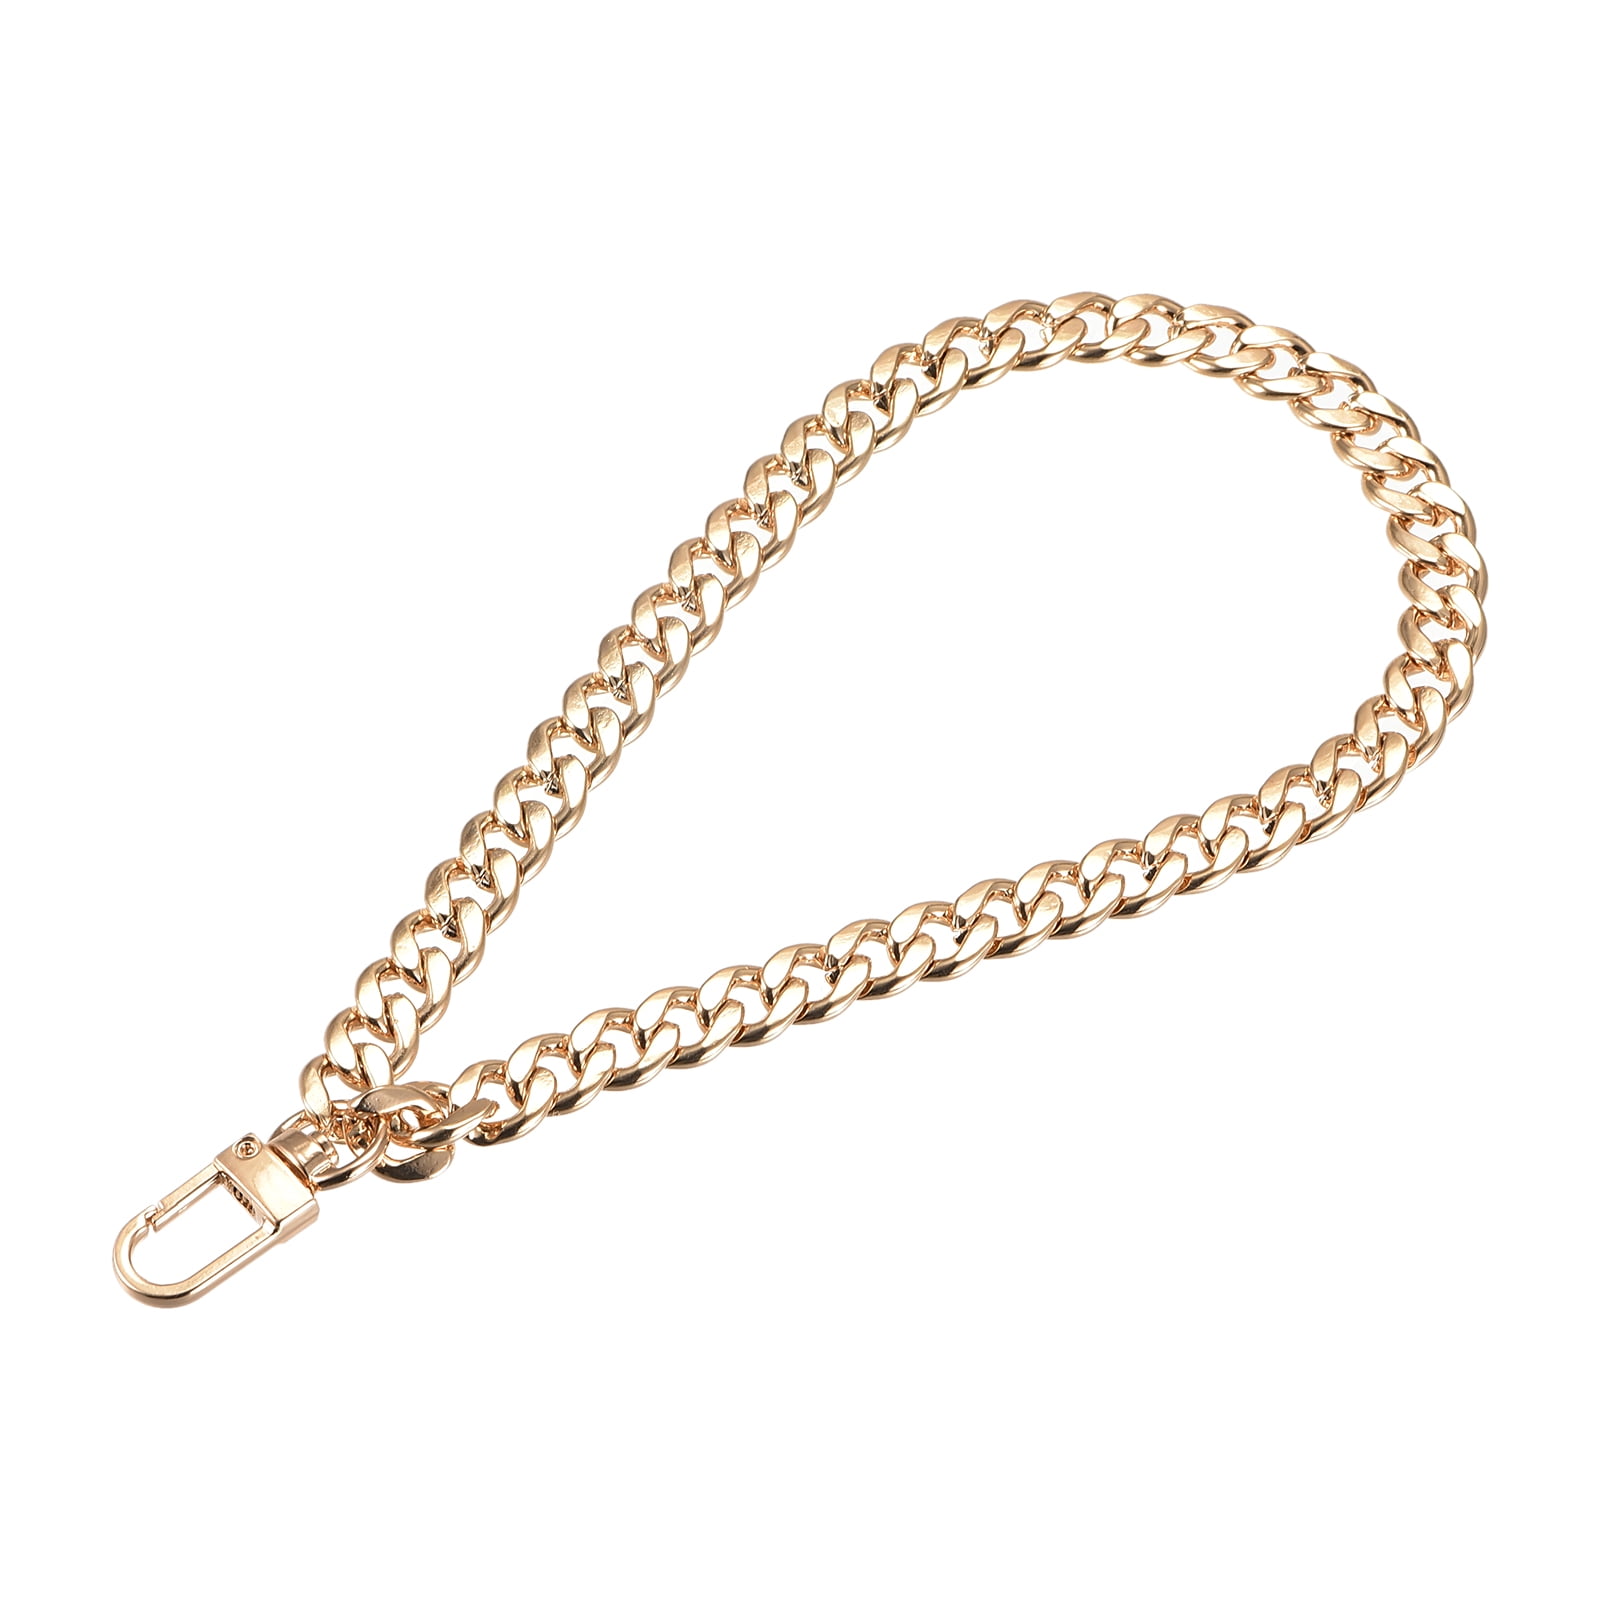 women for car keys chains，car keychains rings holder lanyard bracelets  accessories wristlet cover shell letter holder strap